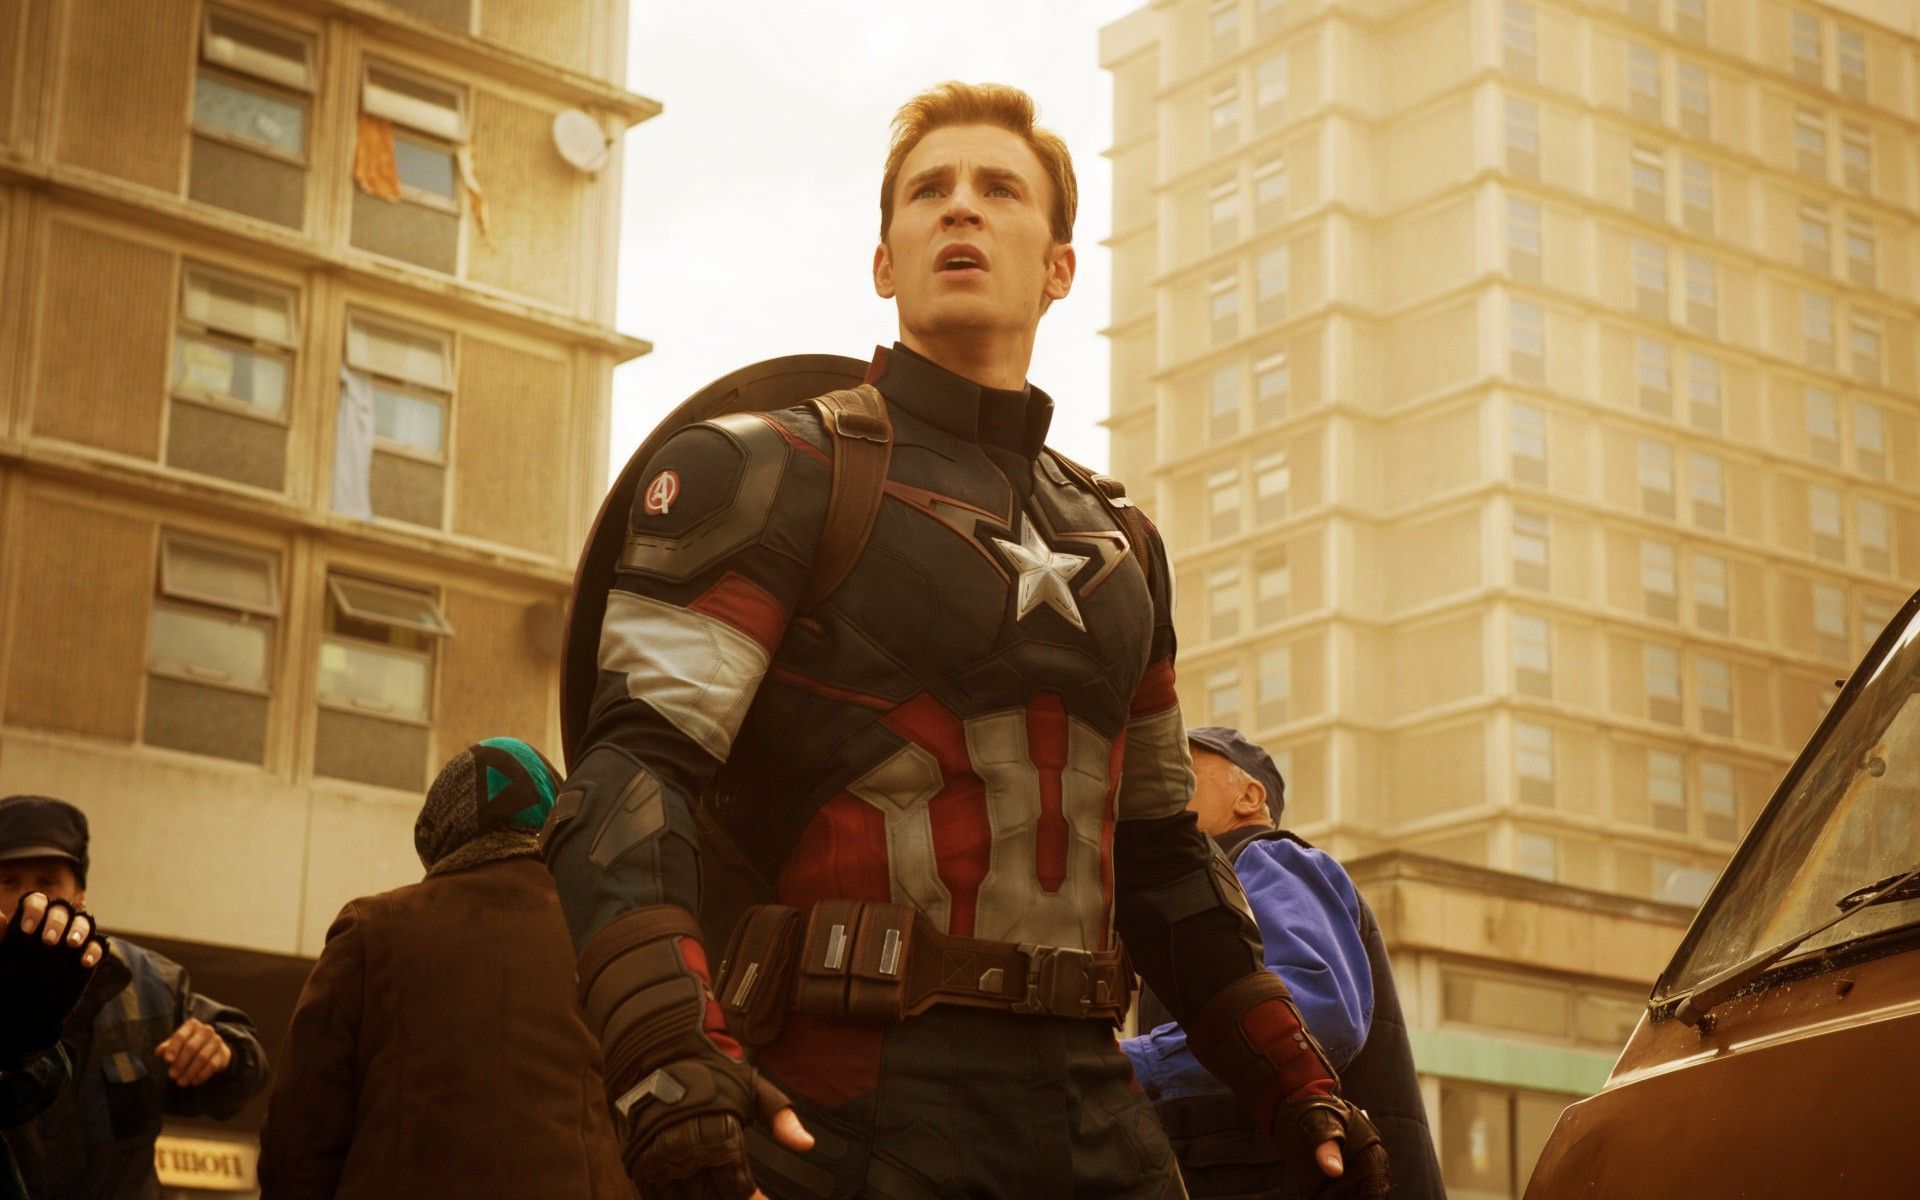 Captain America: Civil War download the new version